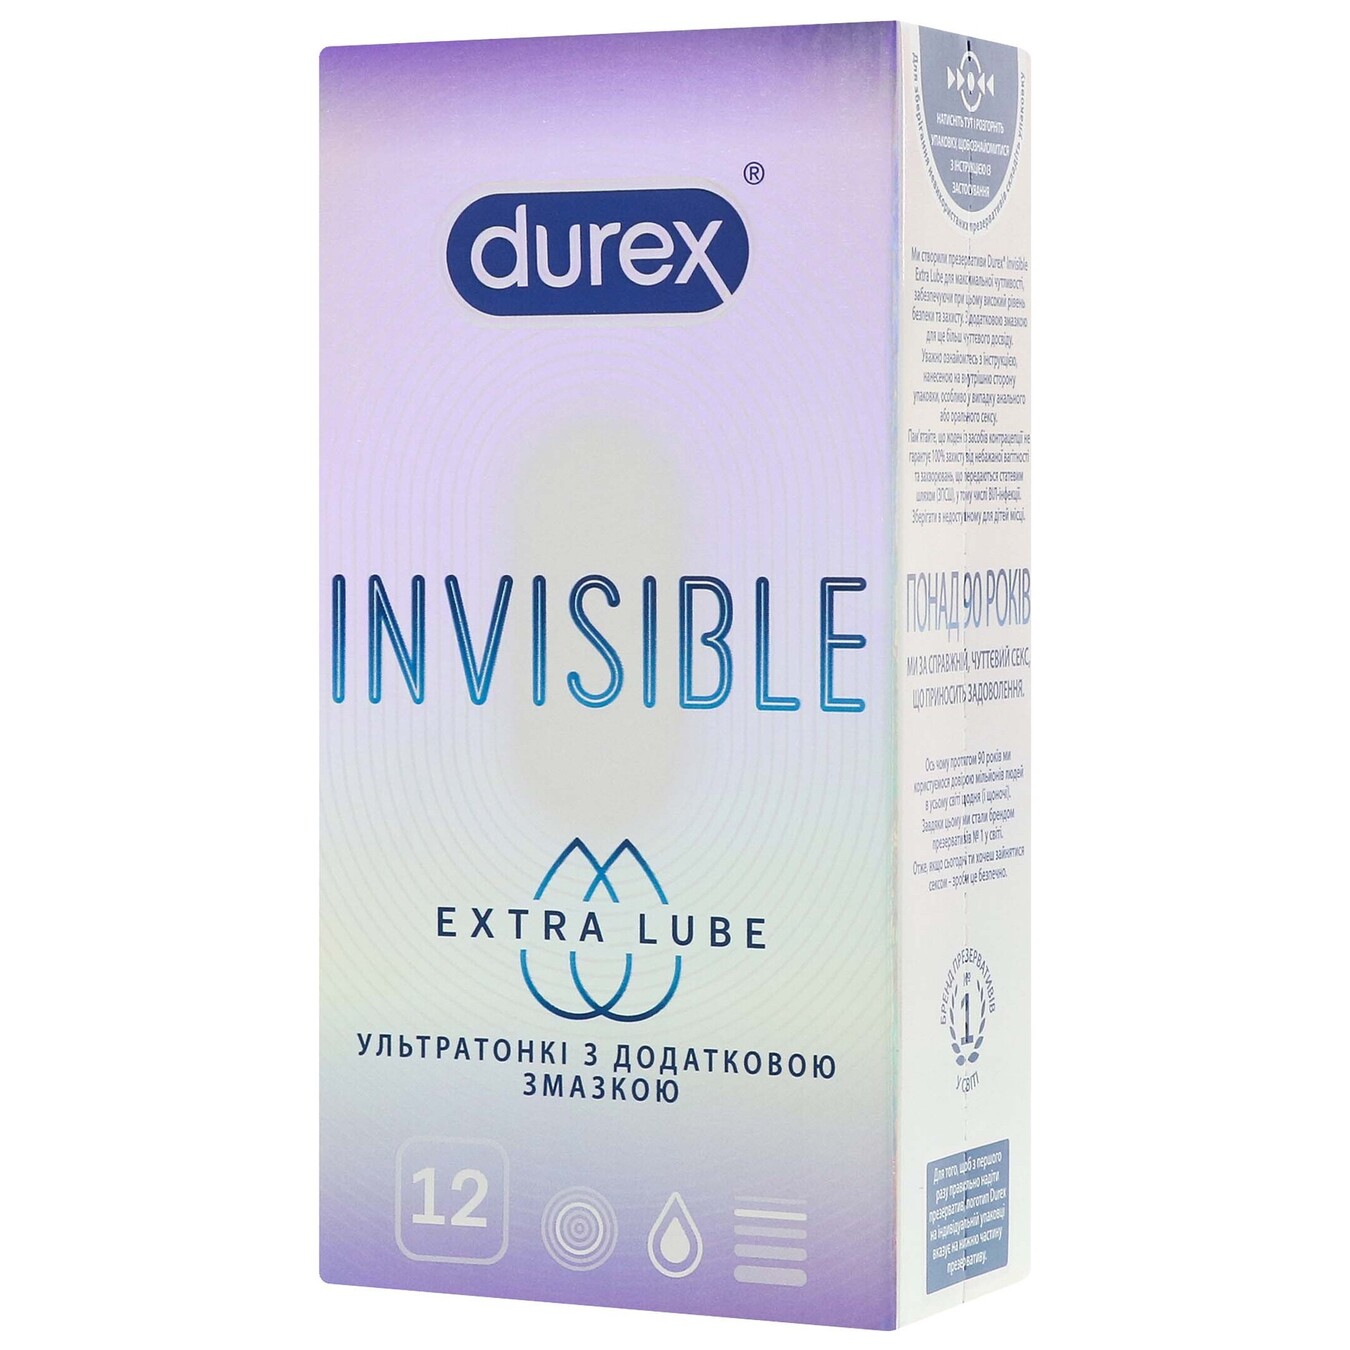 Презервативы Durex №12 Invisible Extra Lube латексные со смазкой 3